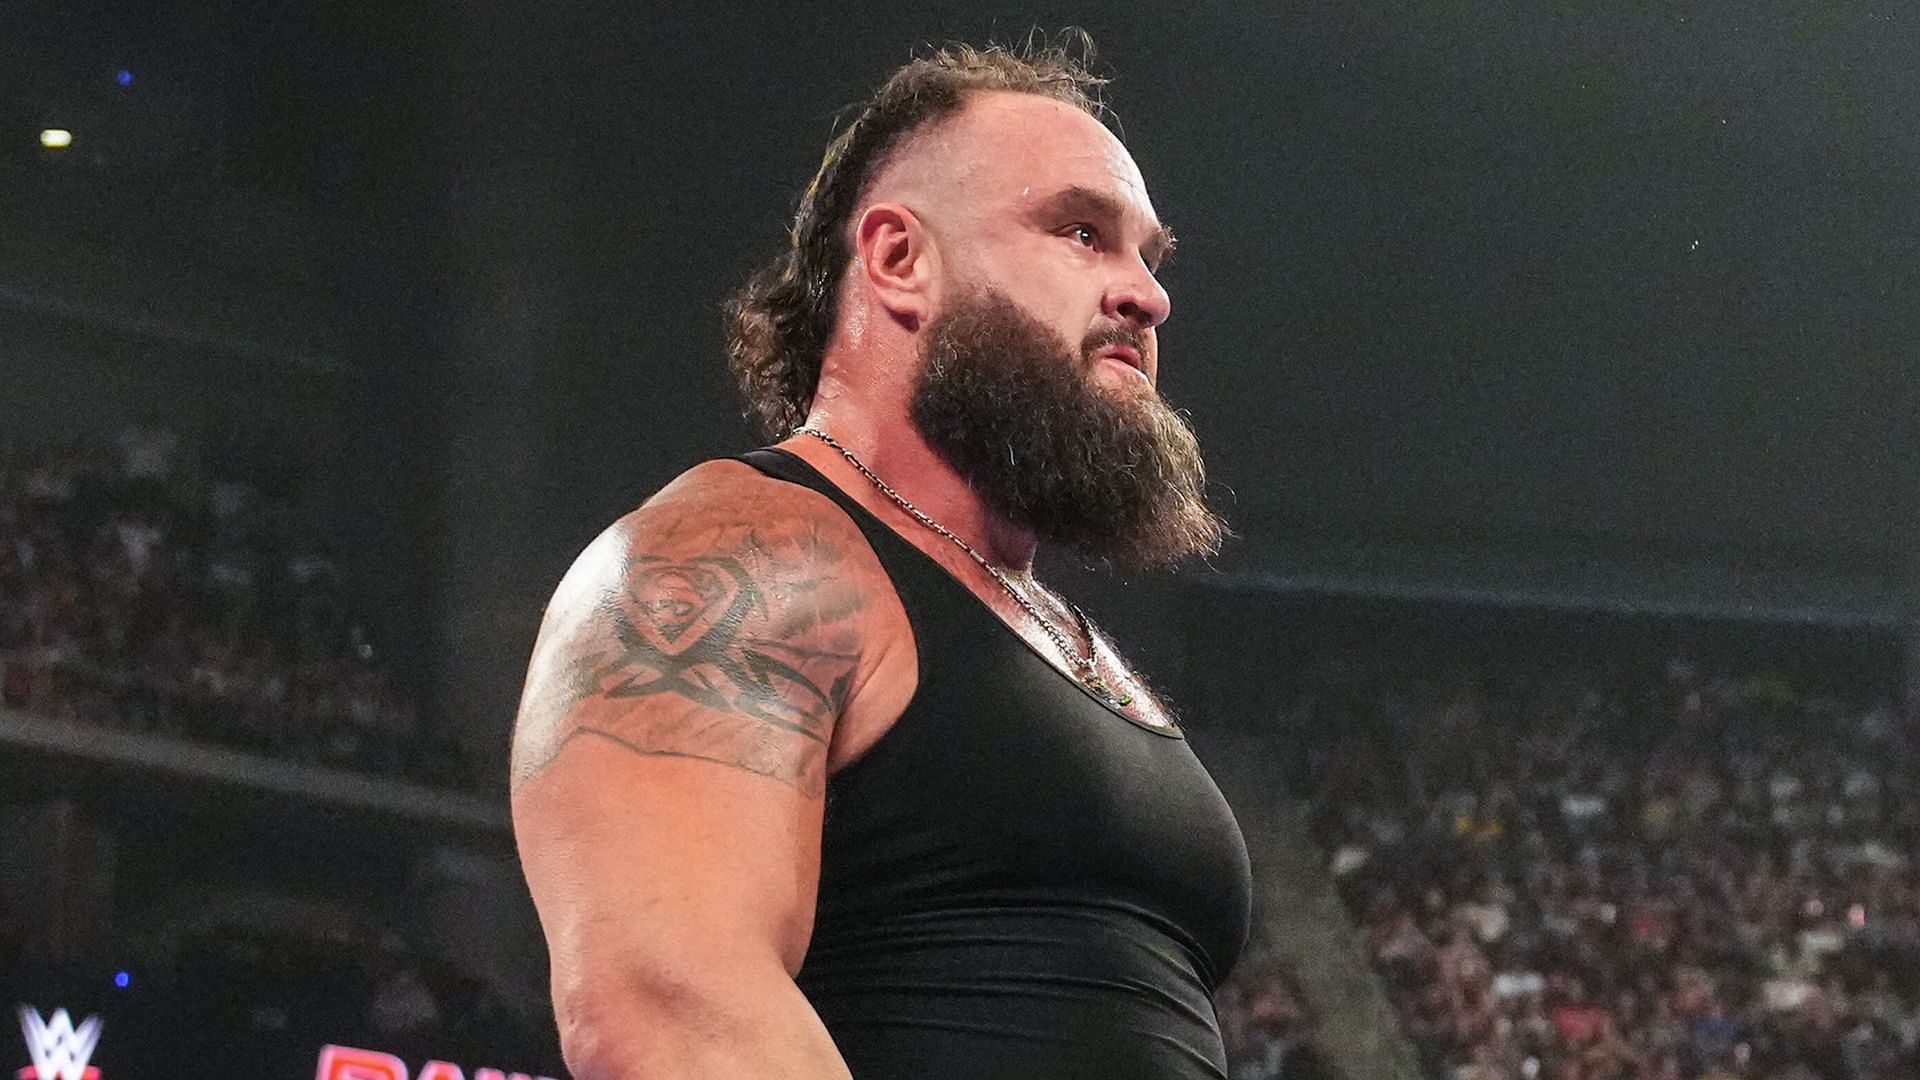 Braun Strowman came back to WWE a few years ago